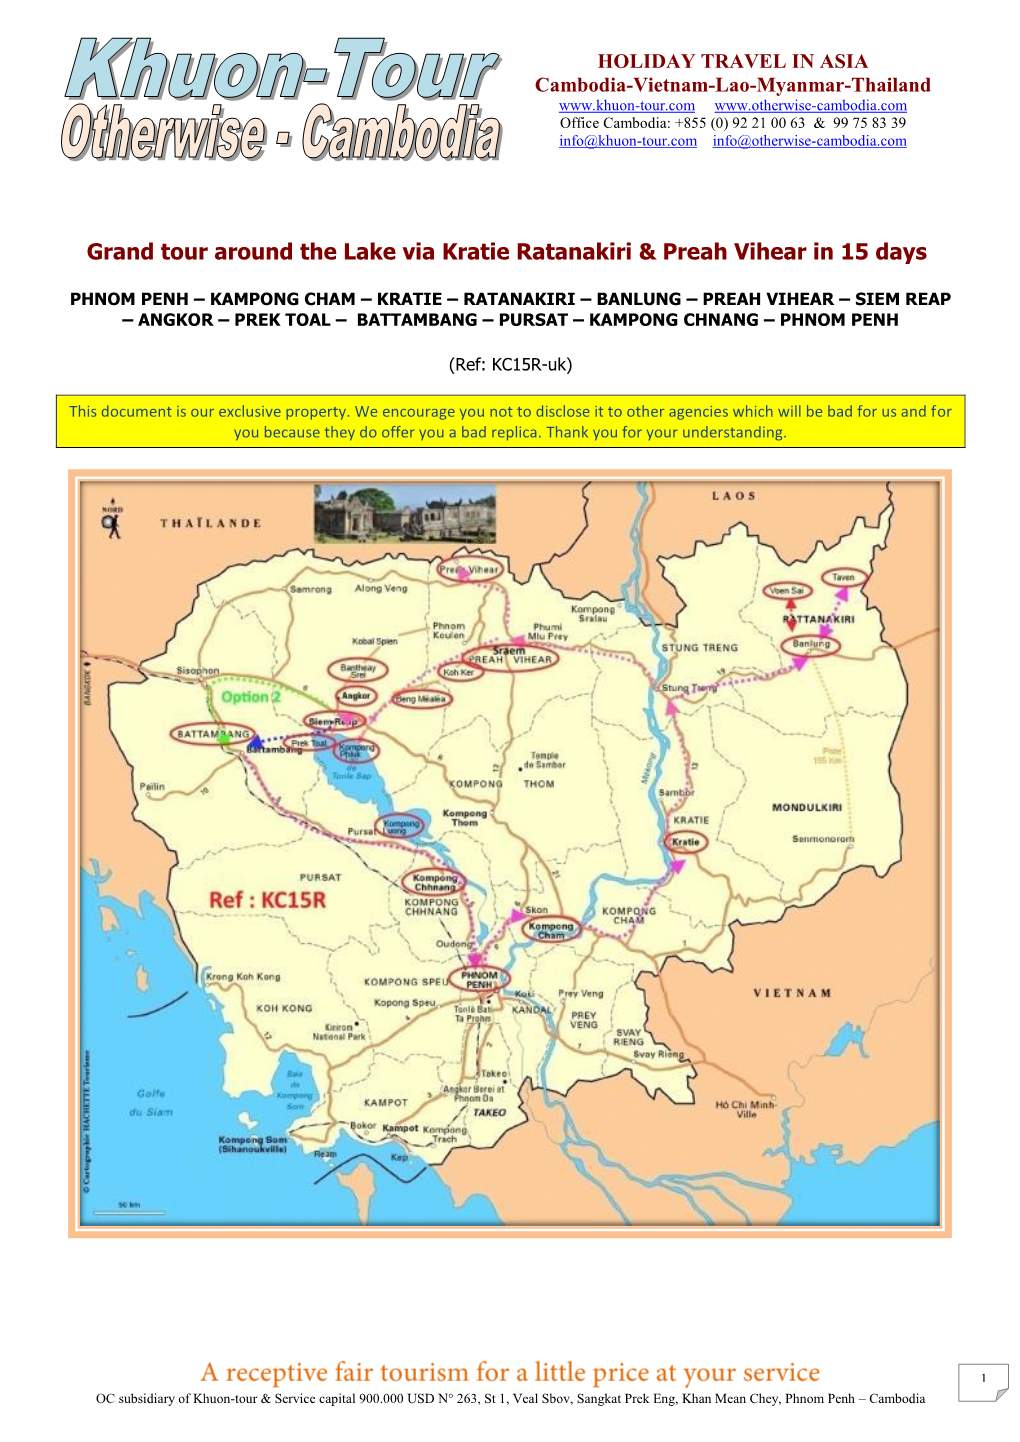 Grand Tour Around the Lake Via Kratie Ratanakiri & Preah Vihear in 15